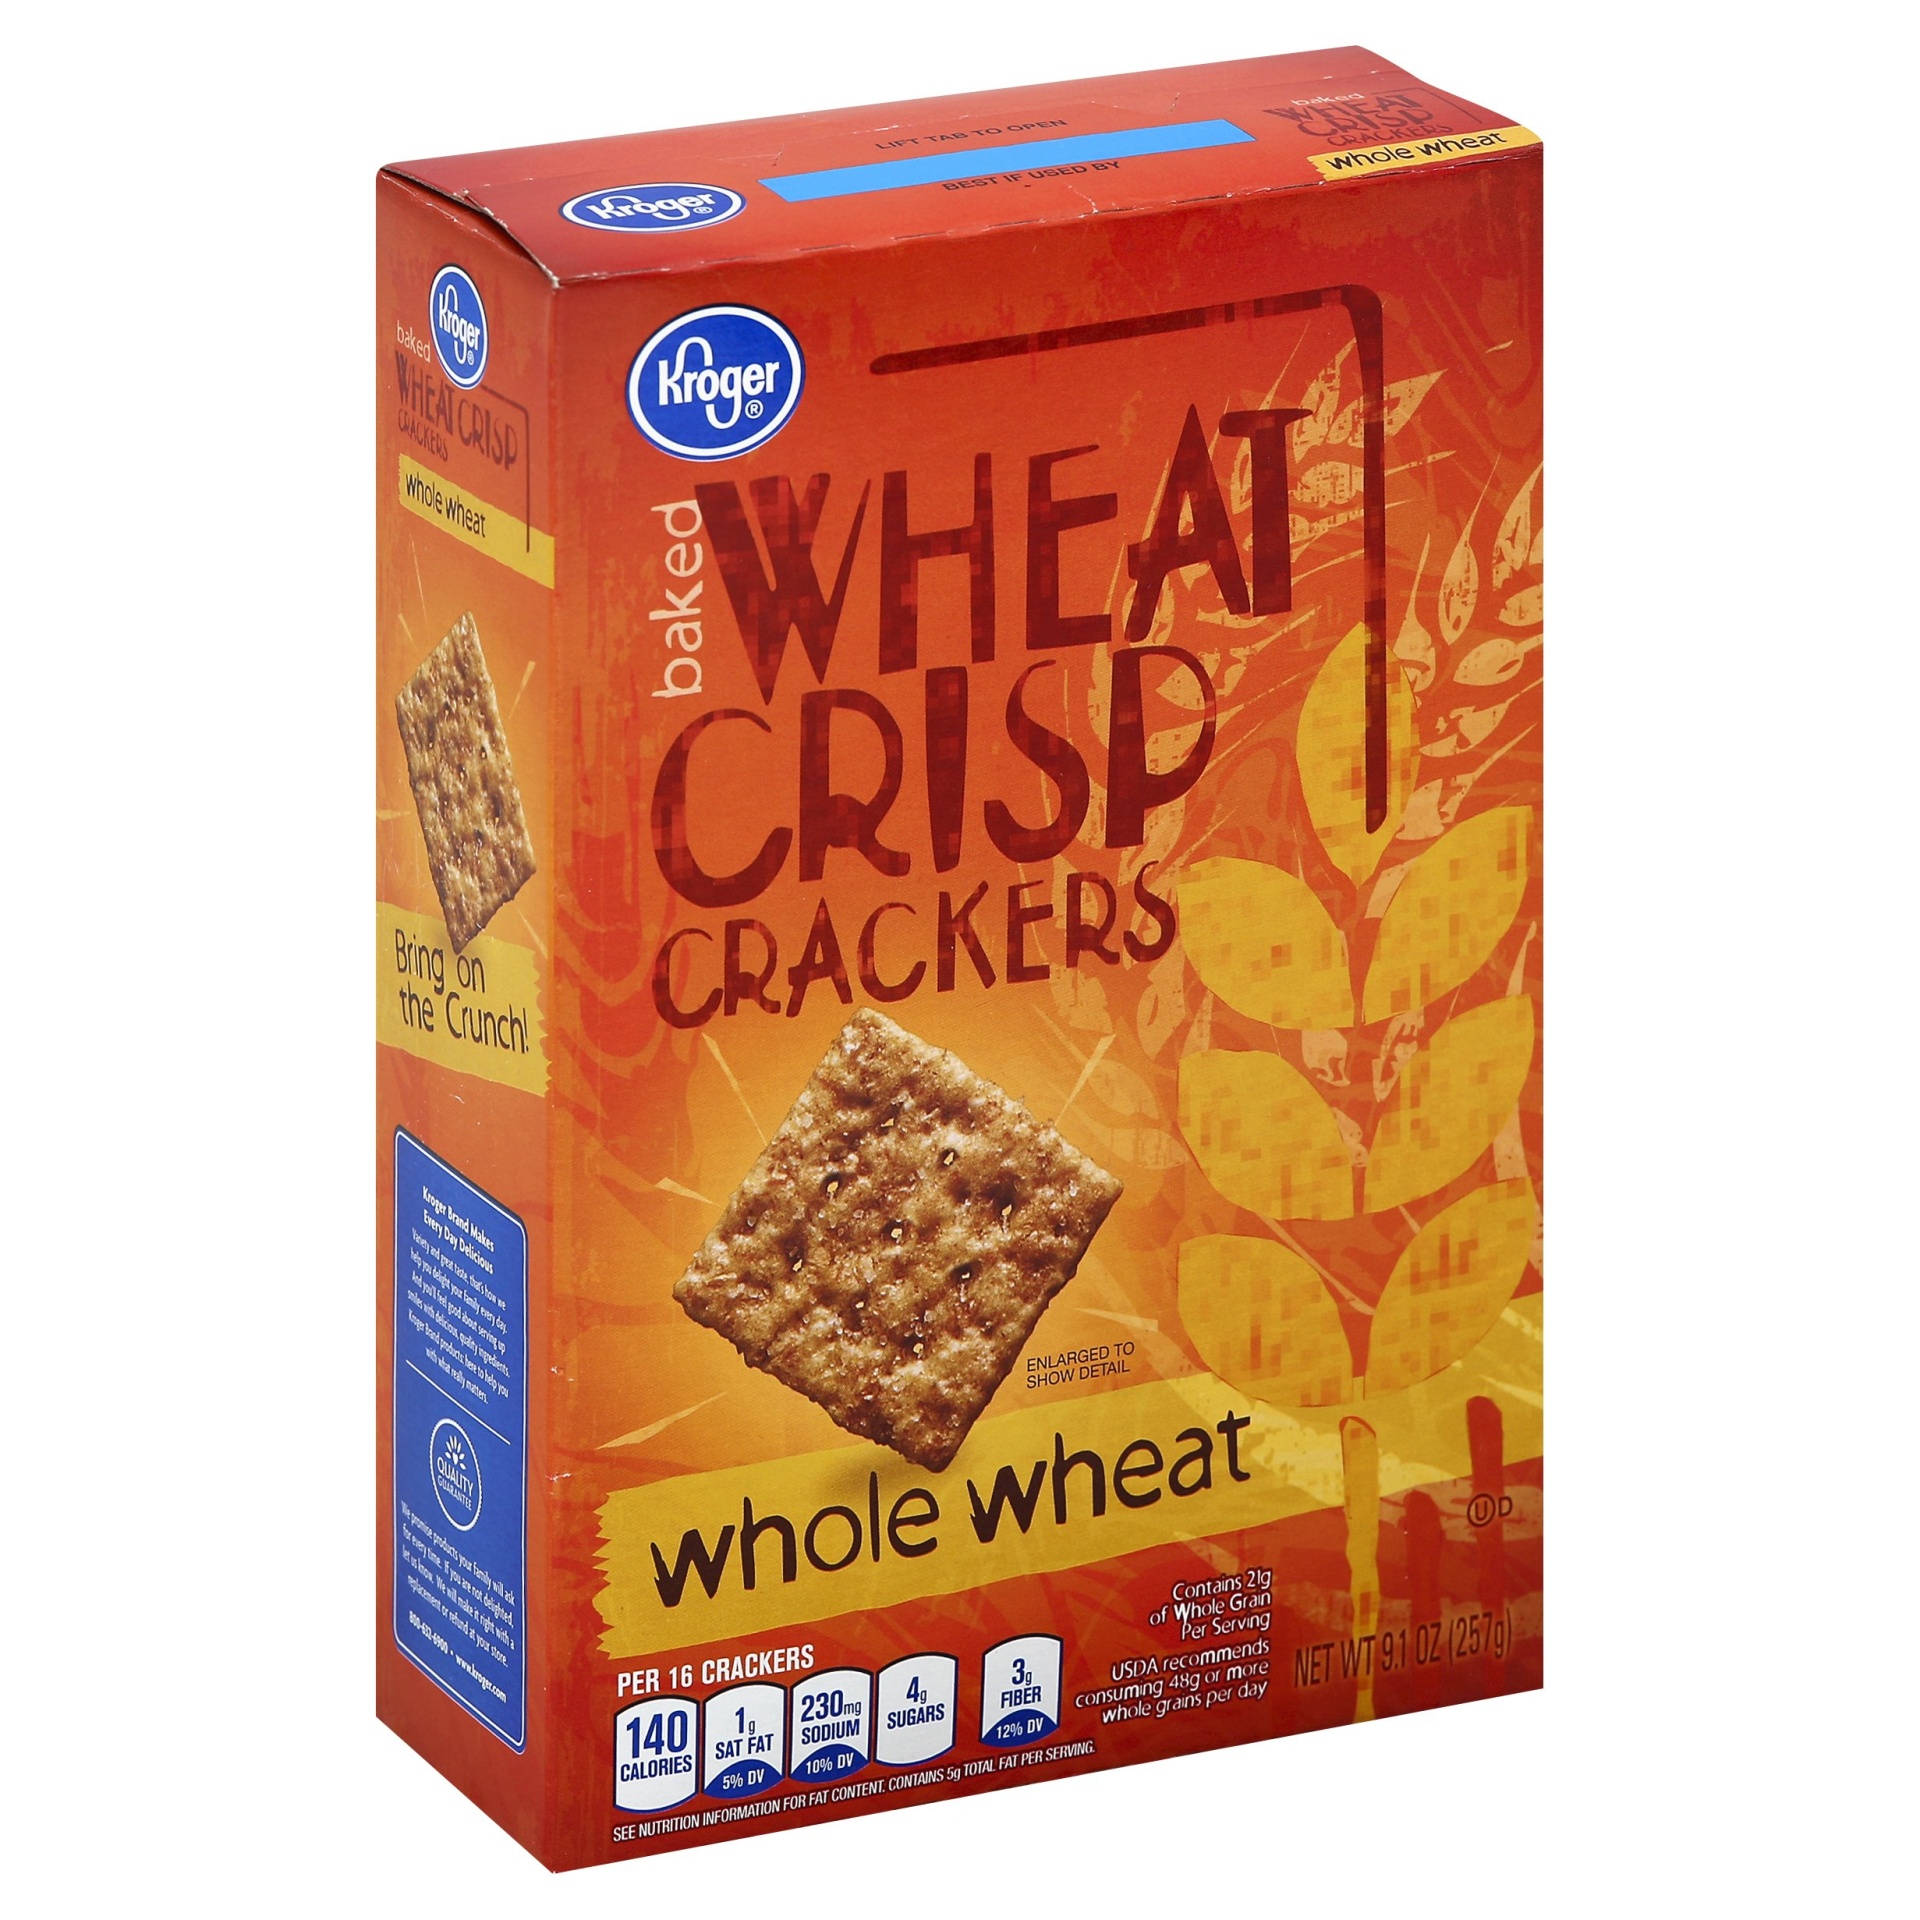 slide 1 of 1, Kroger Baked Wheat Crisp Crackers - Whole Wheat, 9.1 oz